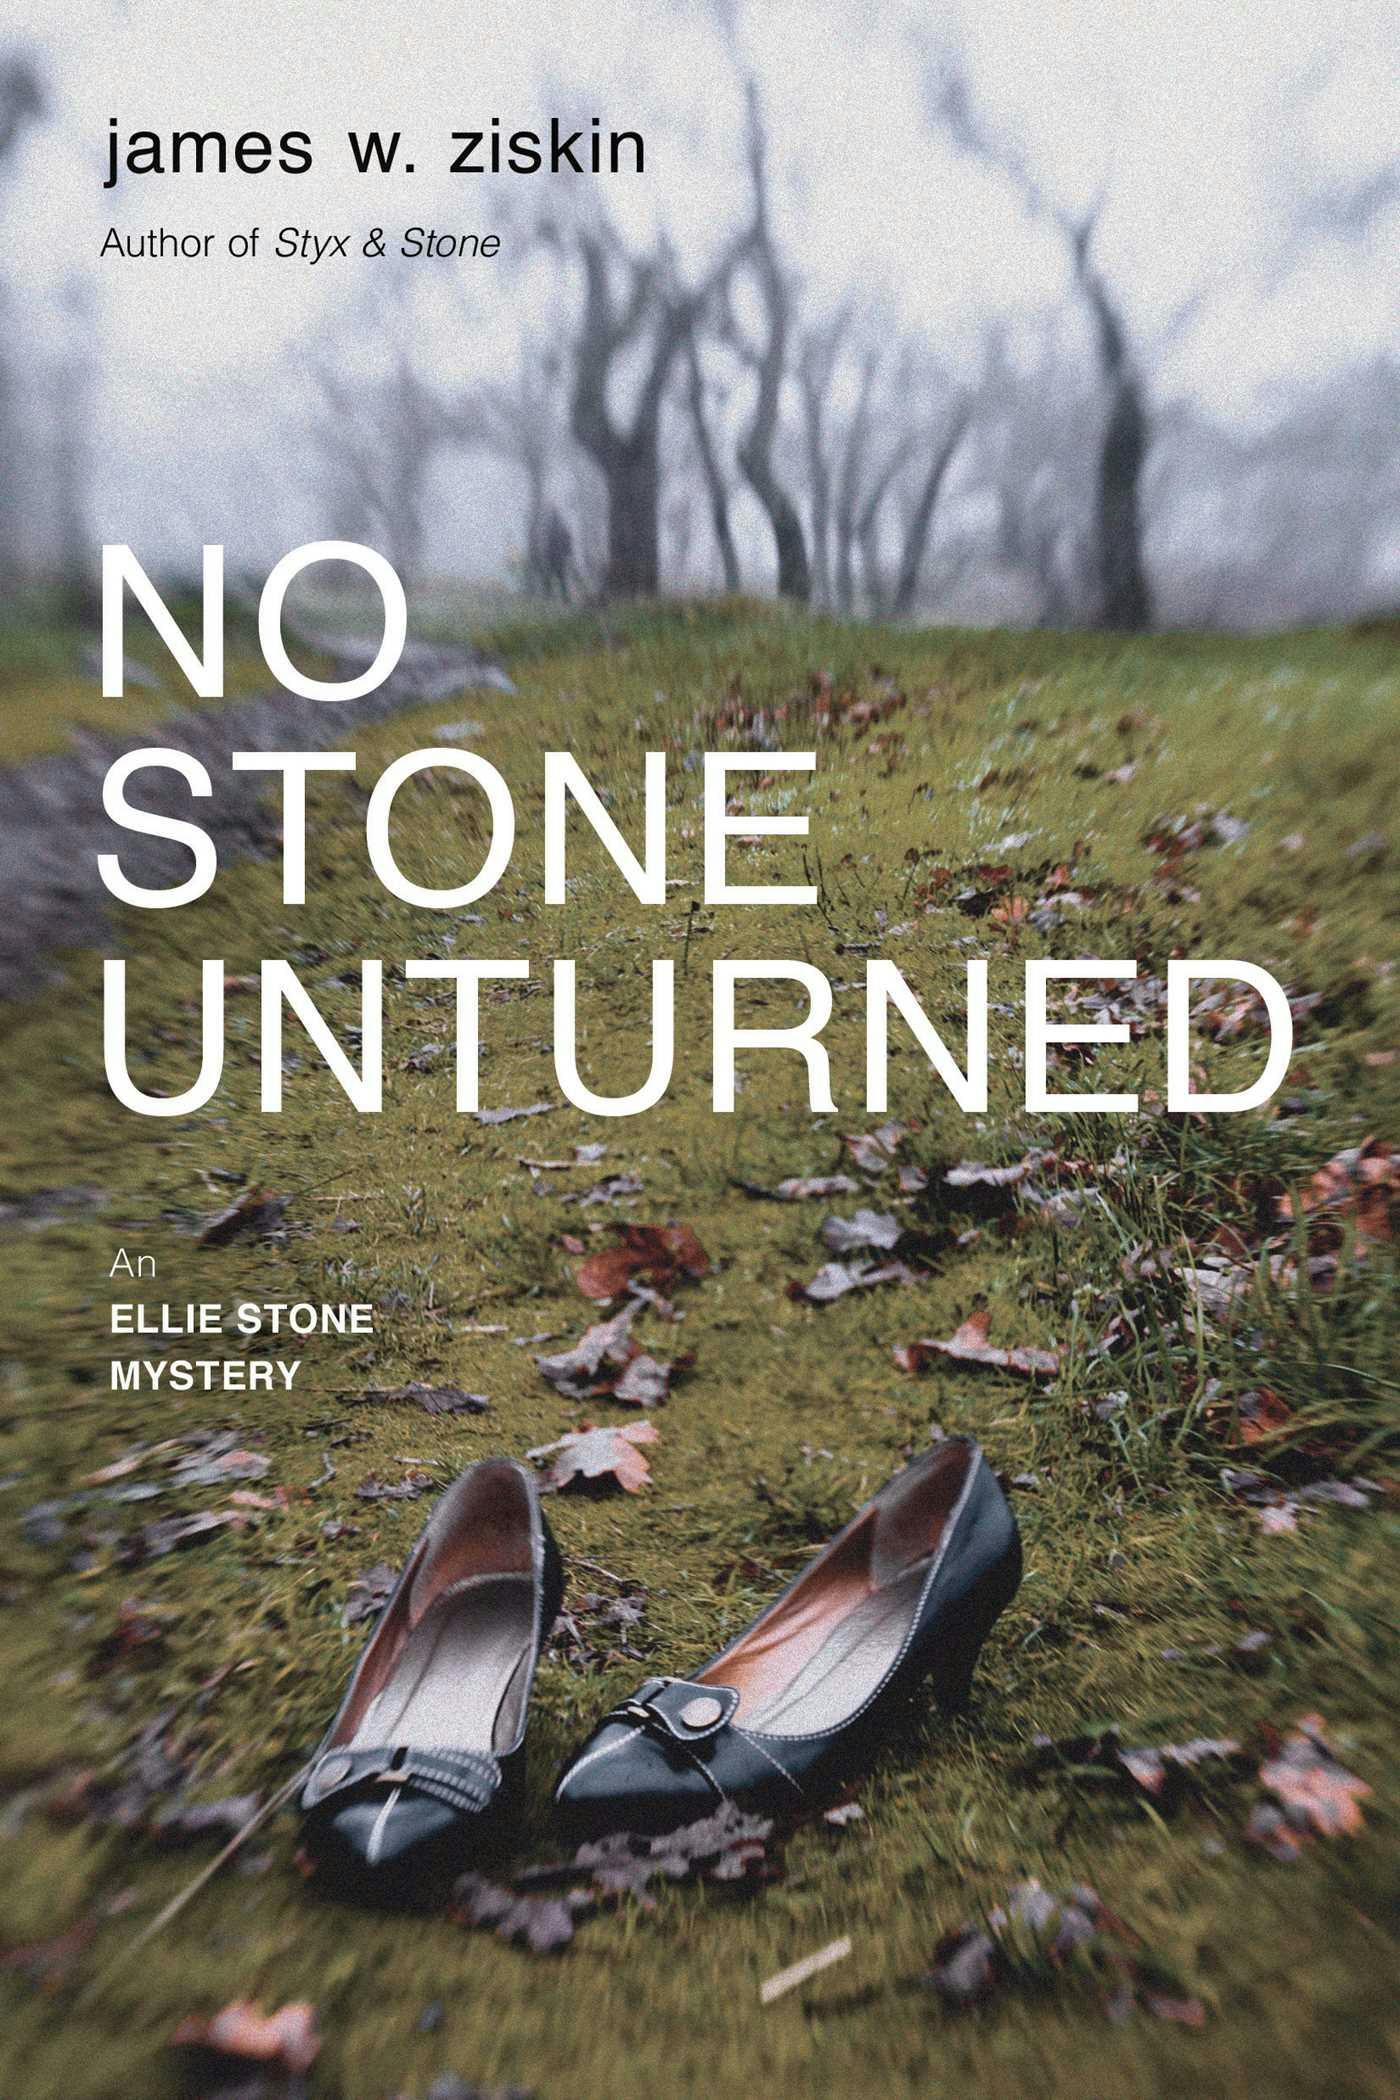 No Stone Unturned: An Ellie Stone Mystery - James W. Ziskin